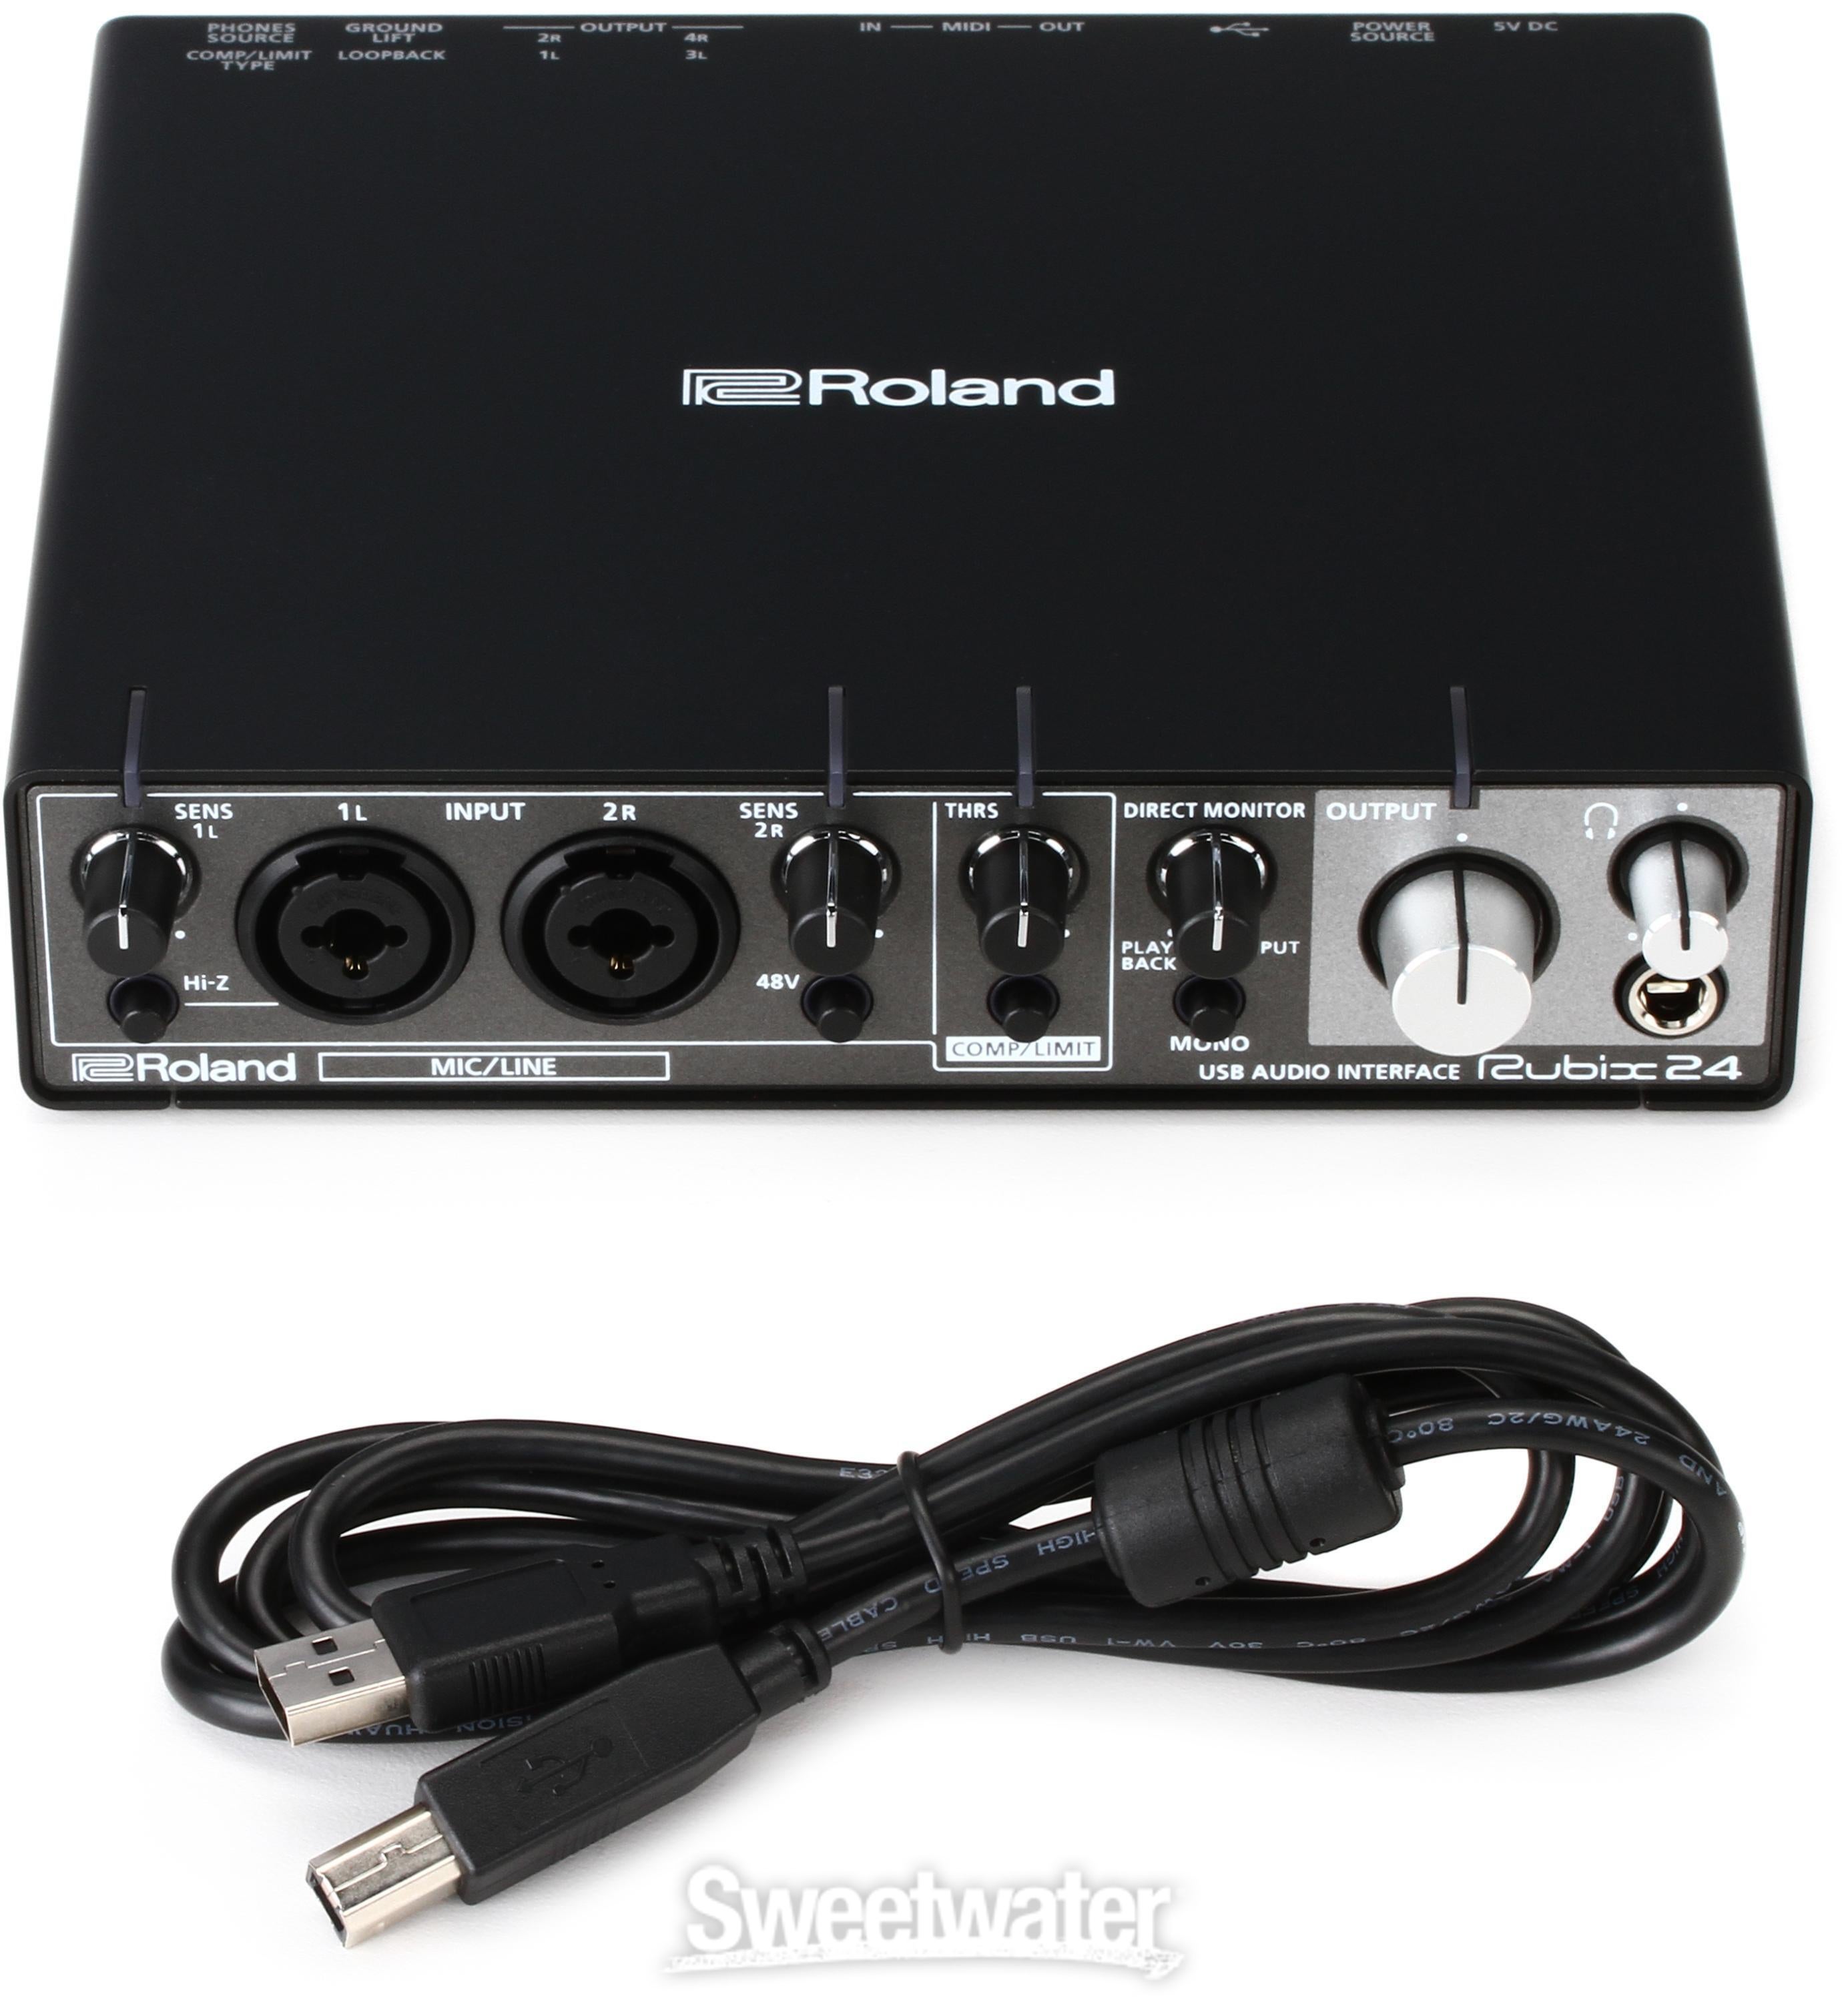 Roland Rubix 24 USB Audio Interface | Sweetwater